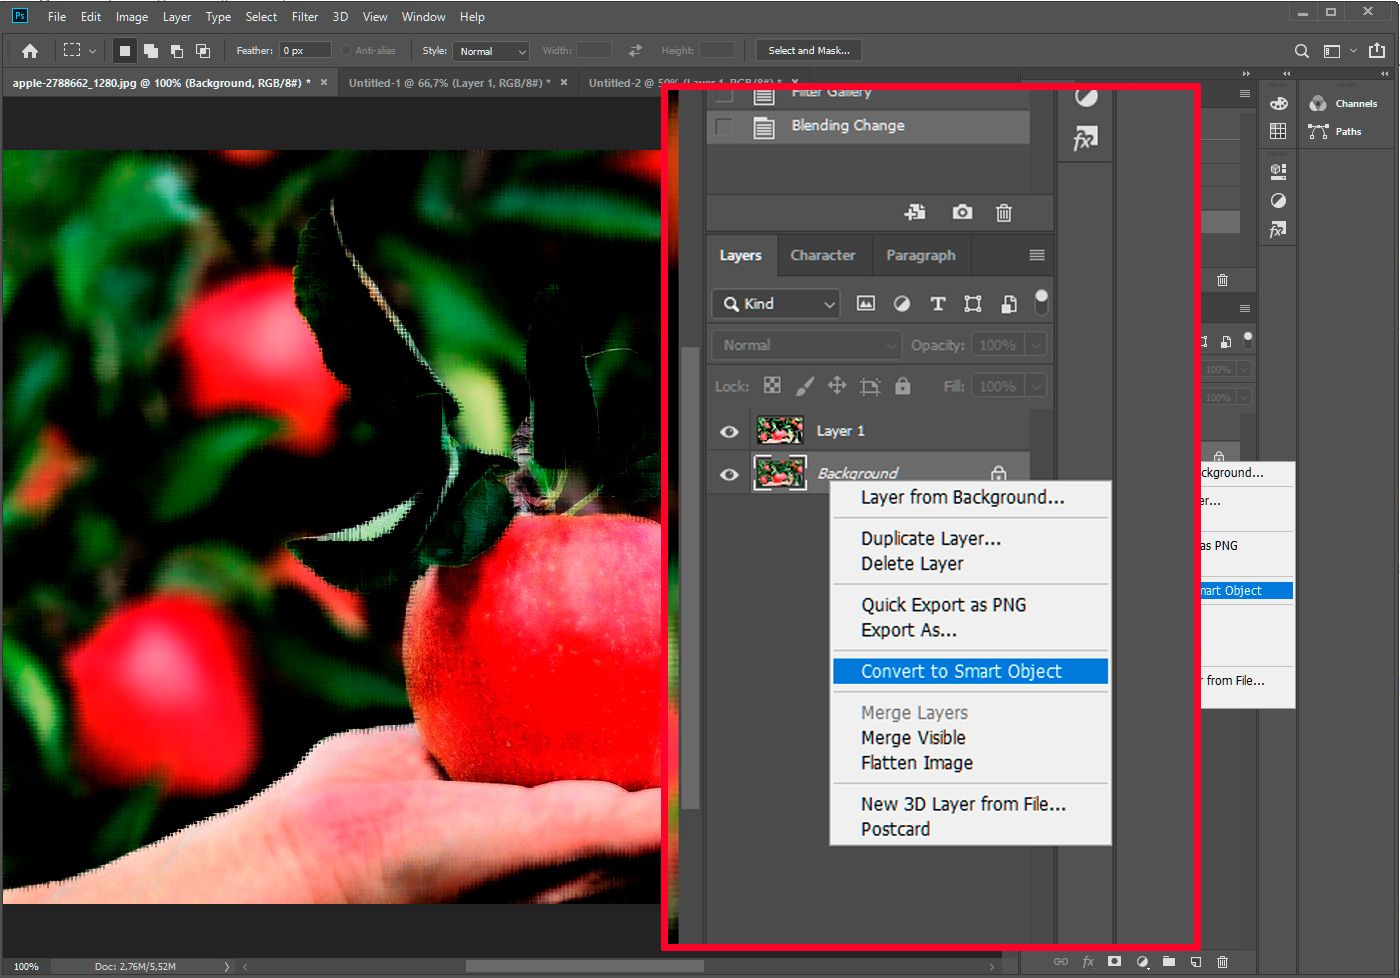 Photoshop converter em Objeto Inteligente..